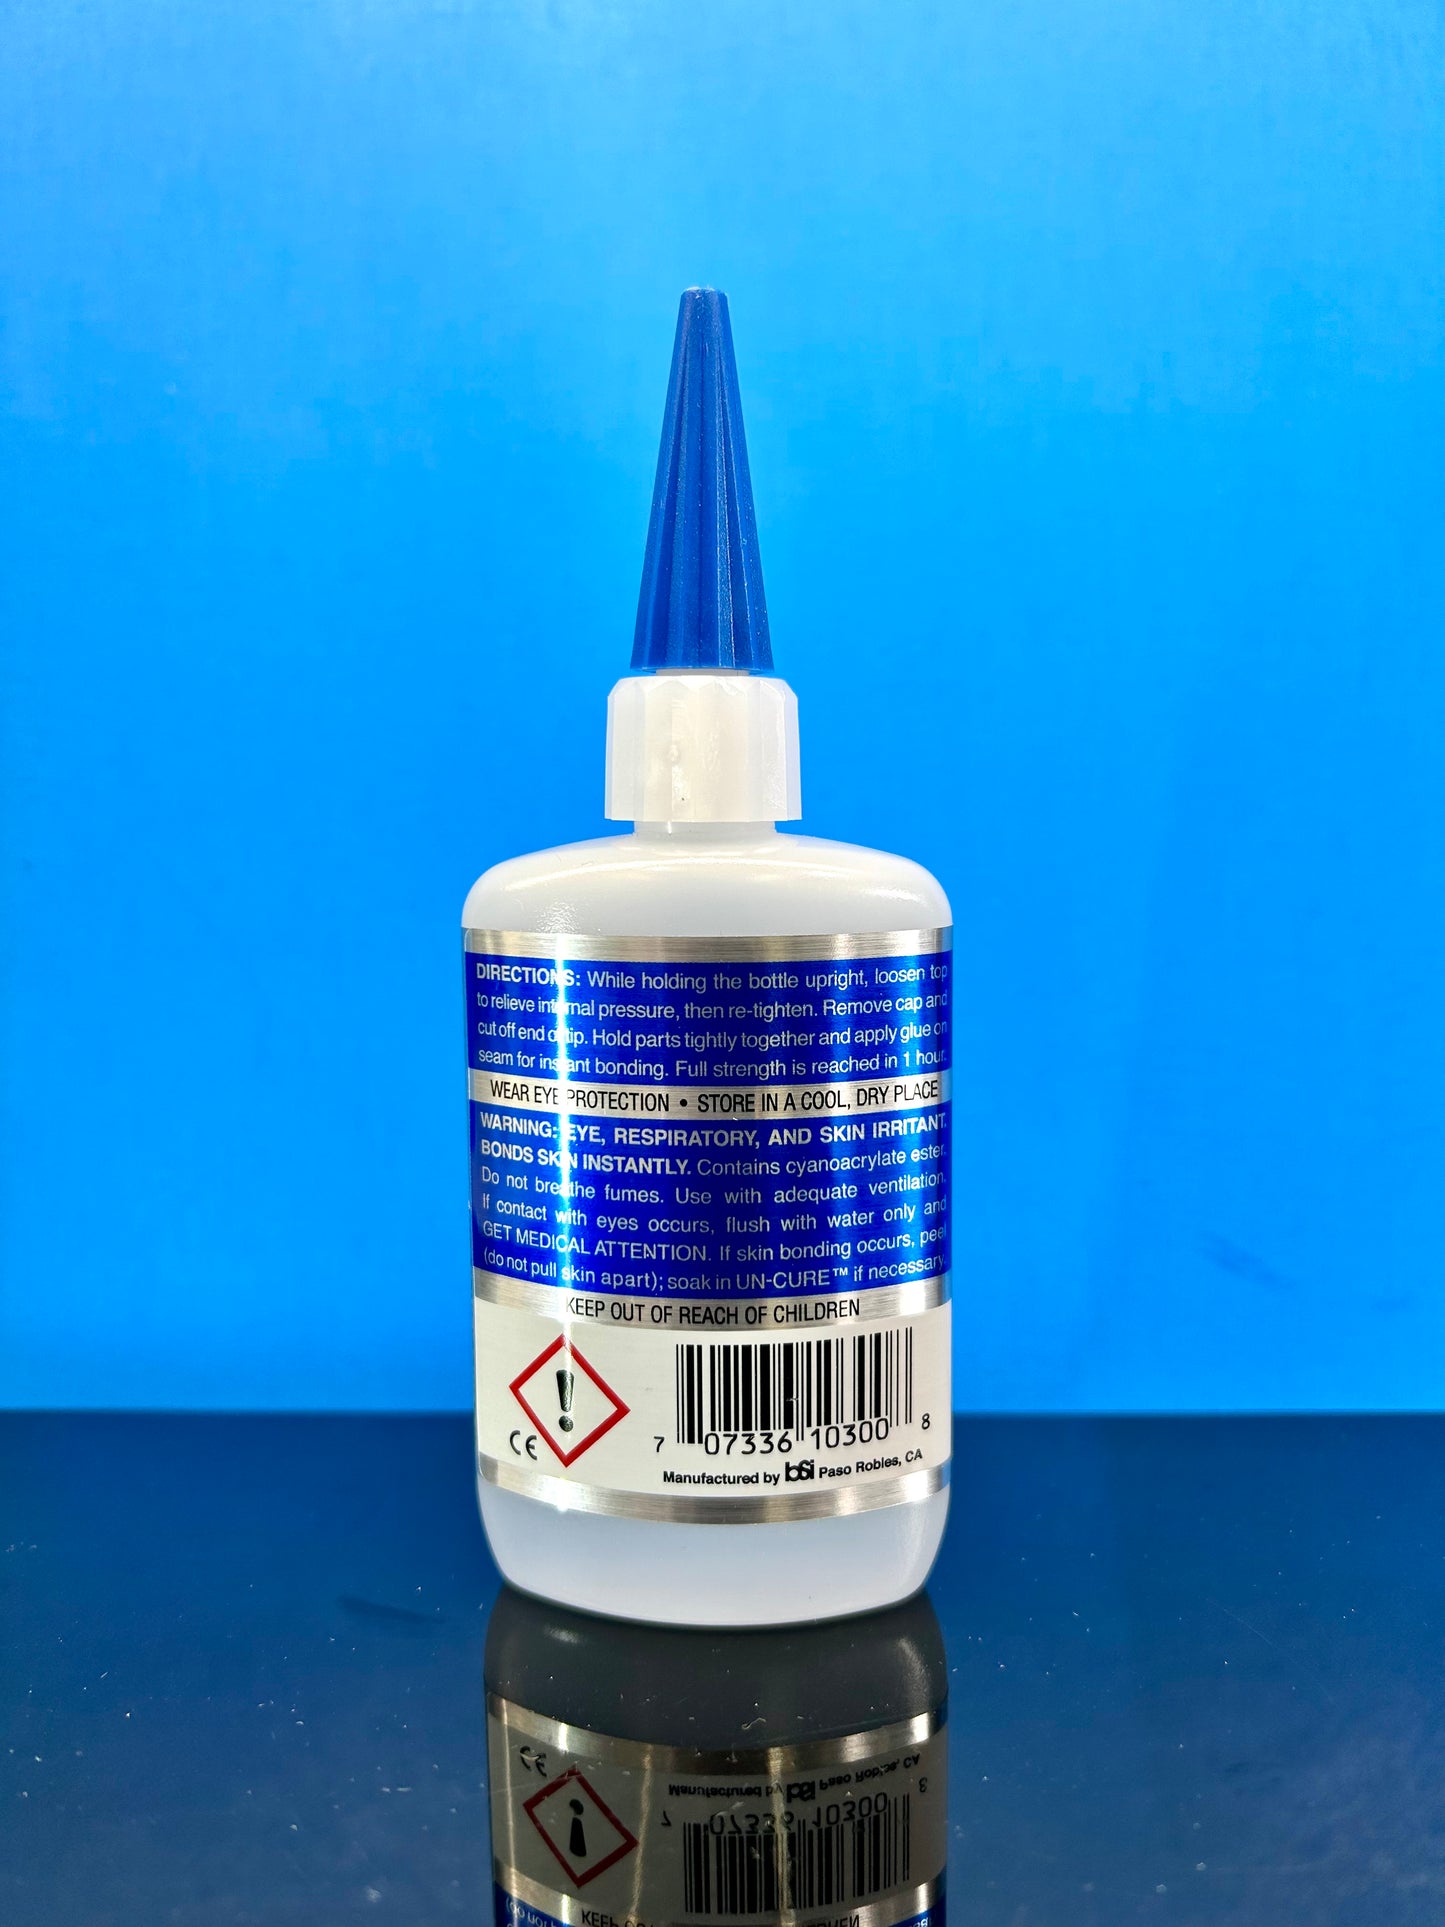 Bob Smith Insta-Cure Super Thin (2) oz. CA Cyanoacrylate Glue